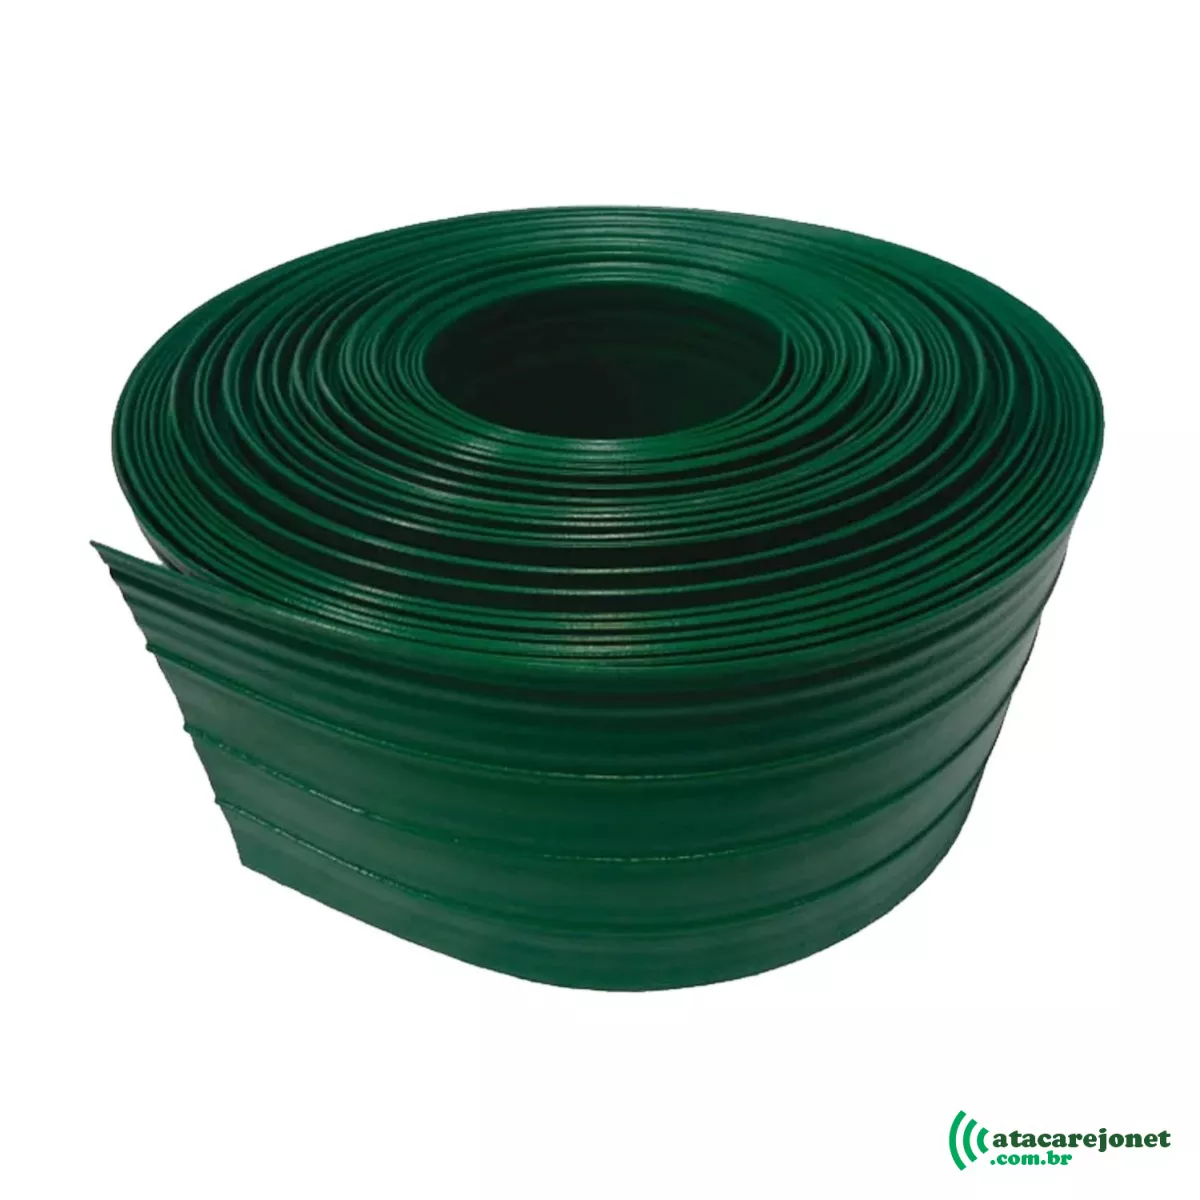 Limitador de Grama Plástico Verde sem Borda com Anti-UV Rolo 25 metros - Plasbran